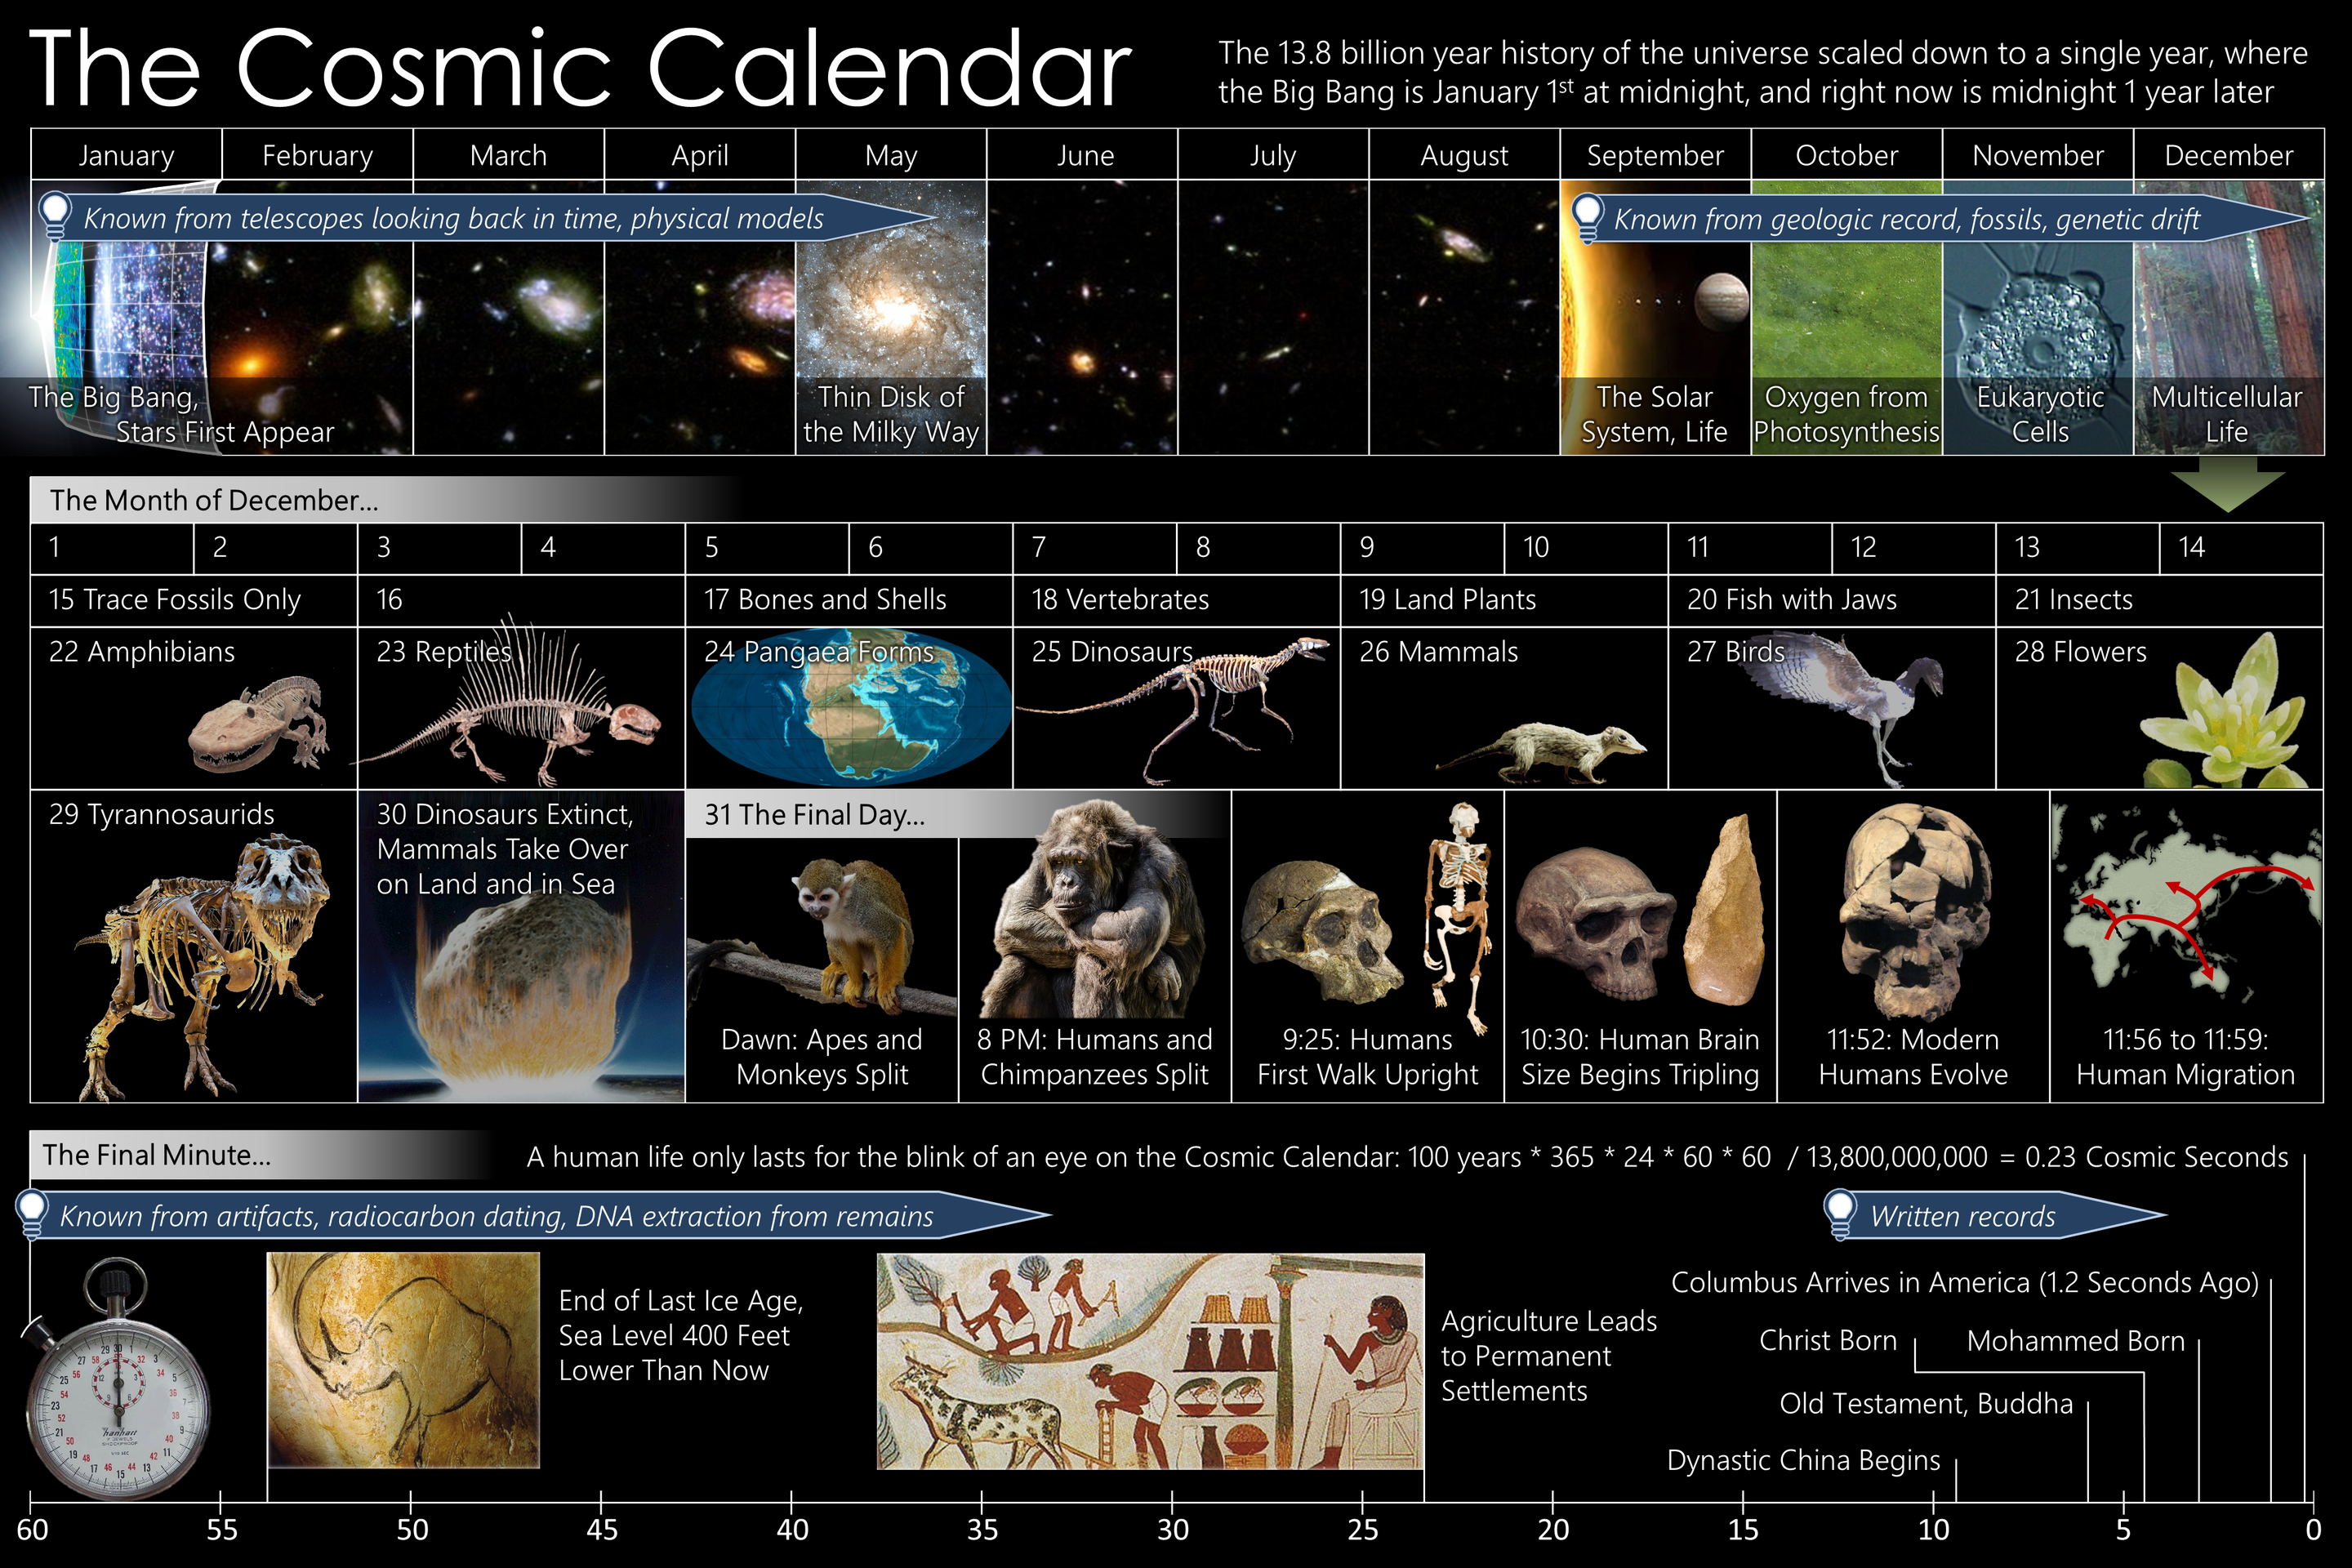 The Cosmic Calendar. Credit: By Efbrazil, CC BY-SA 3.0.